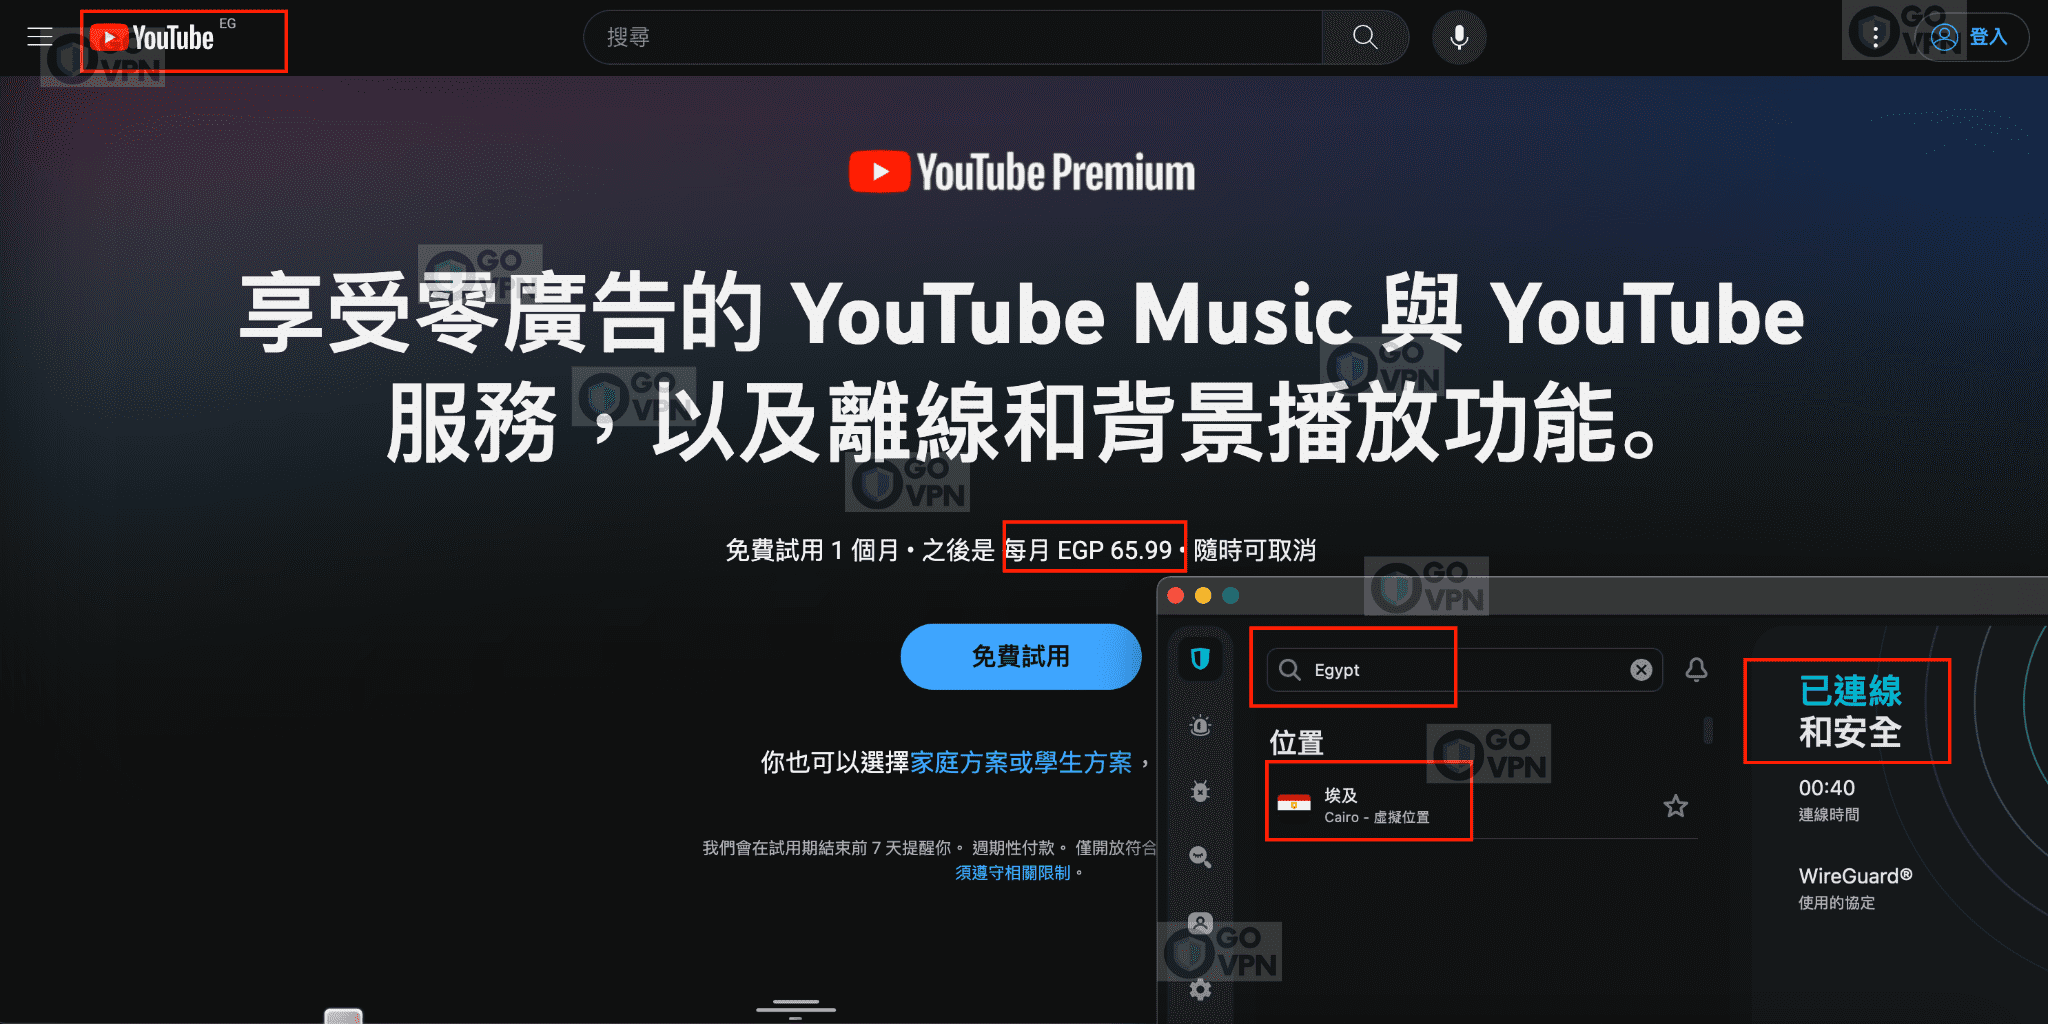 YouTube Premium 埃及網頁